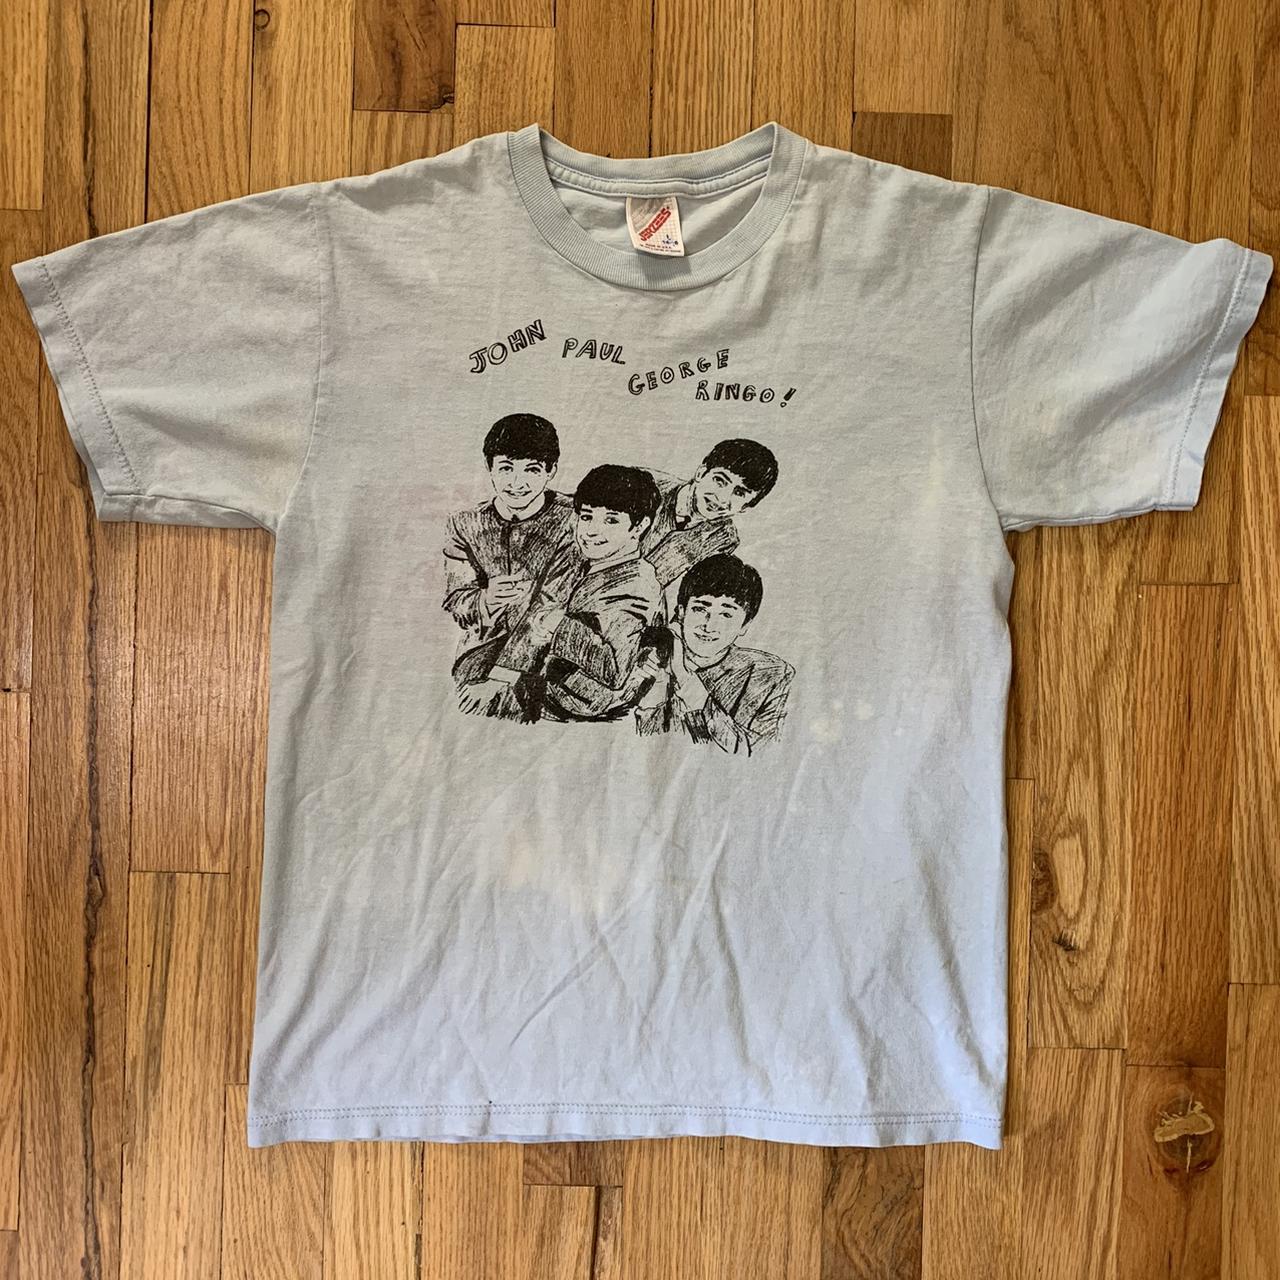 Super rare vintage 90s Beatles “members” shirt light - Depop